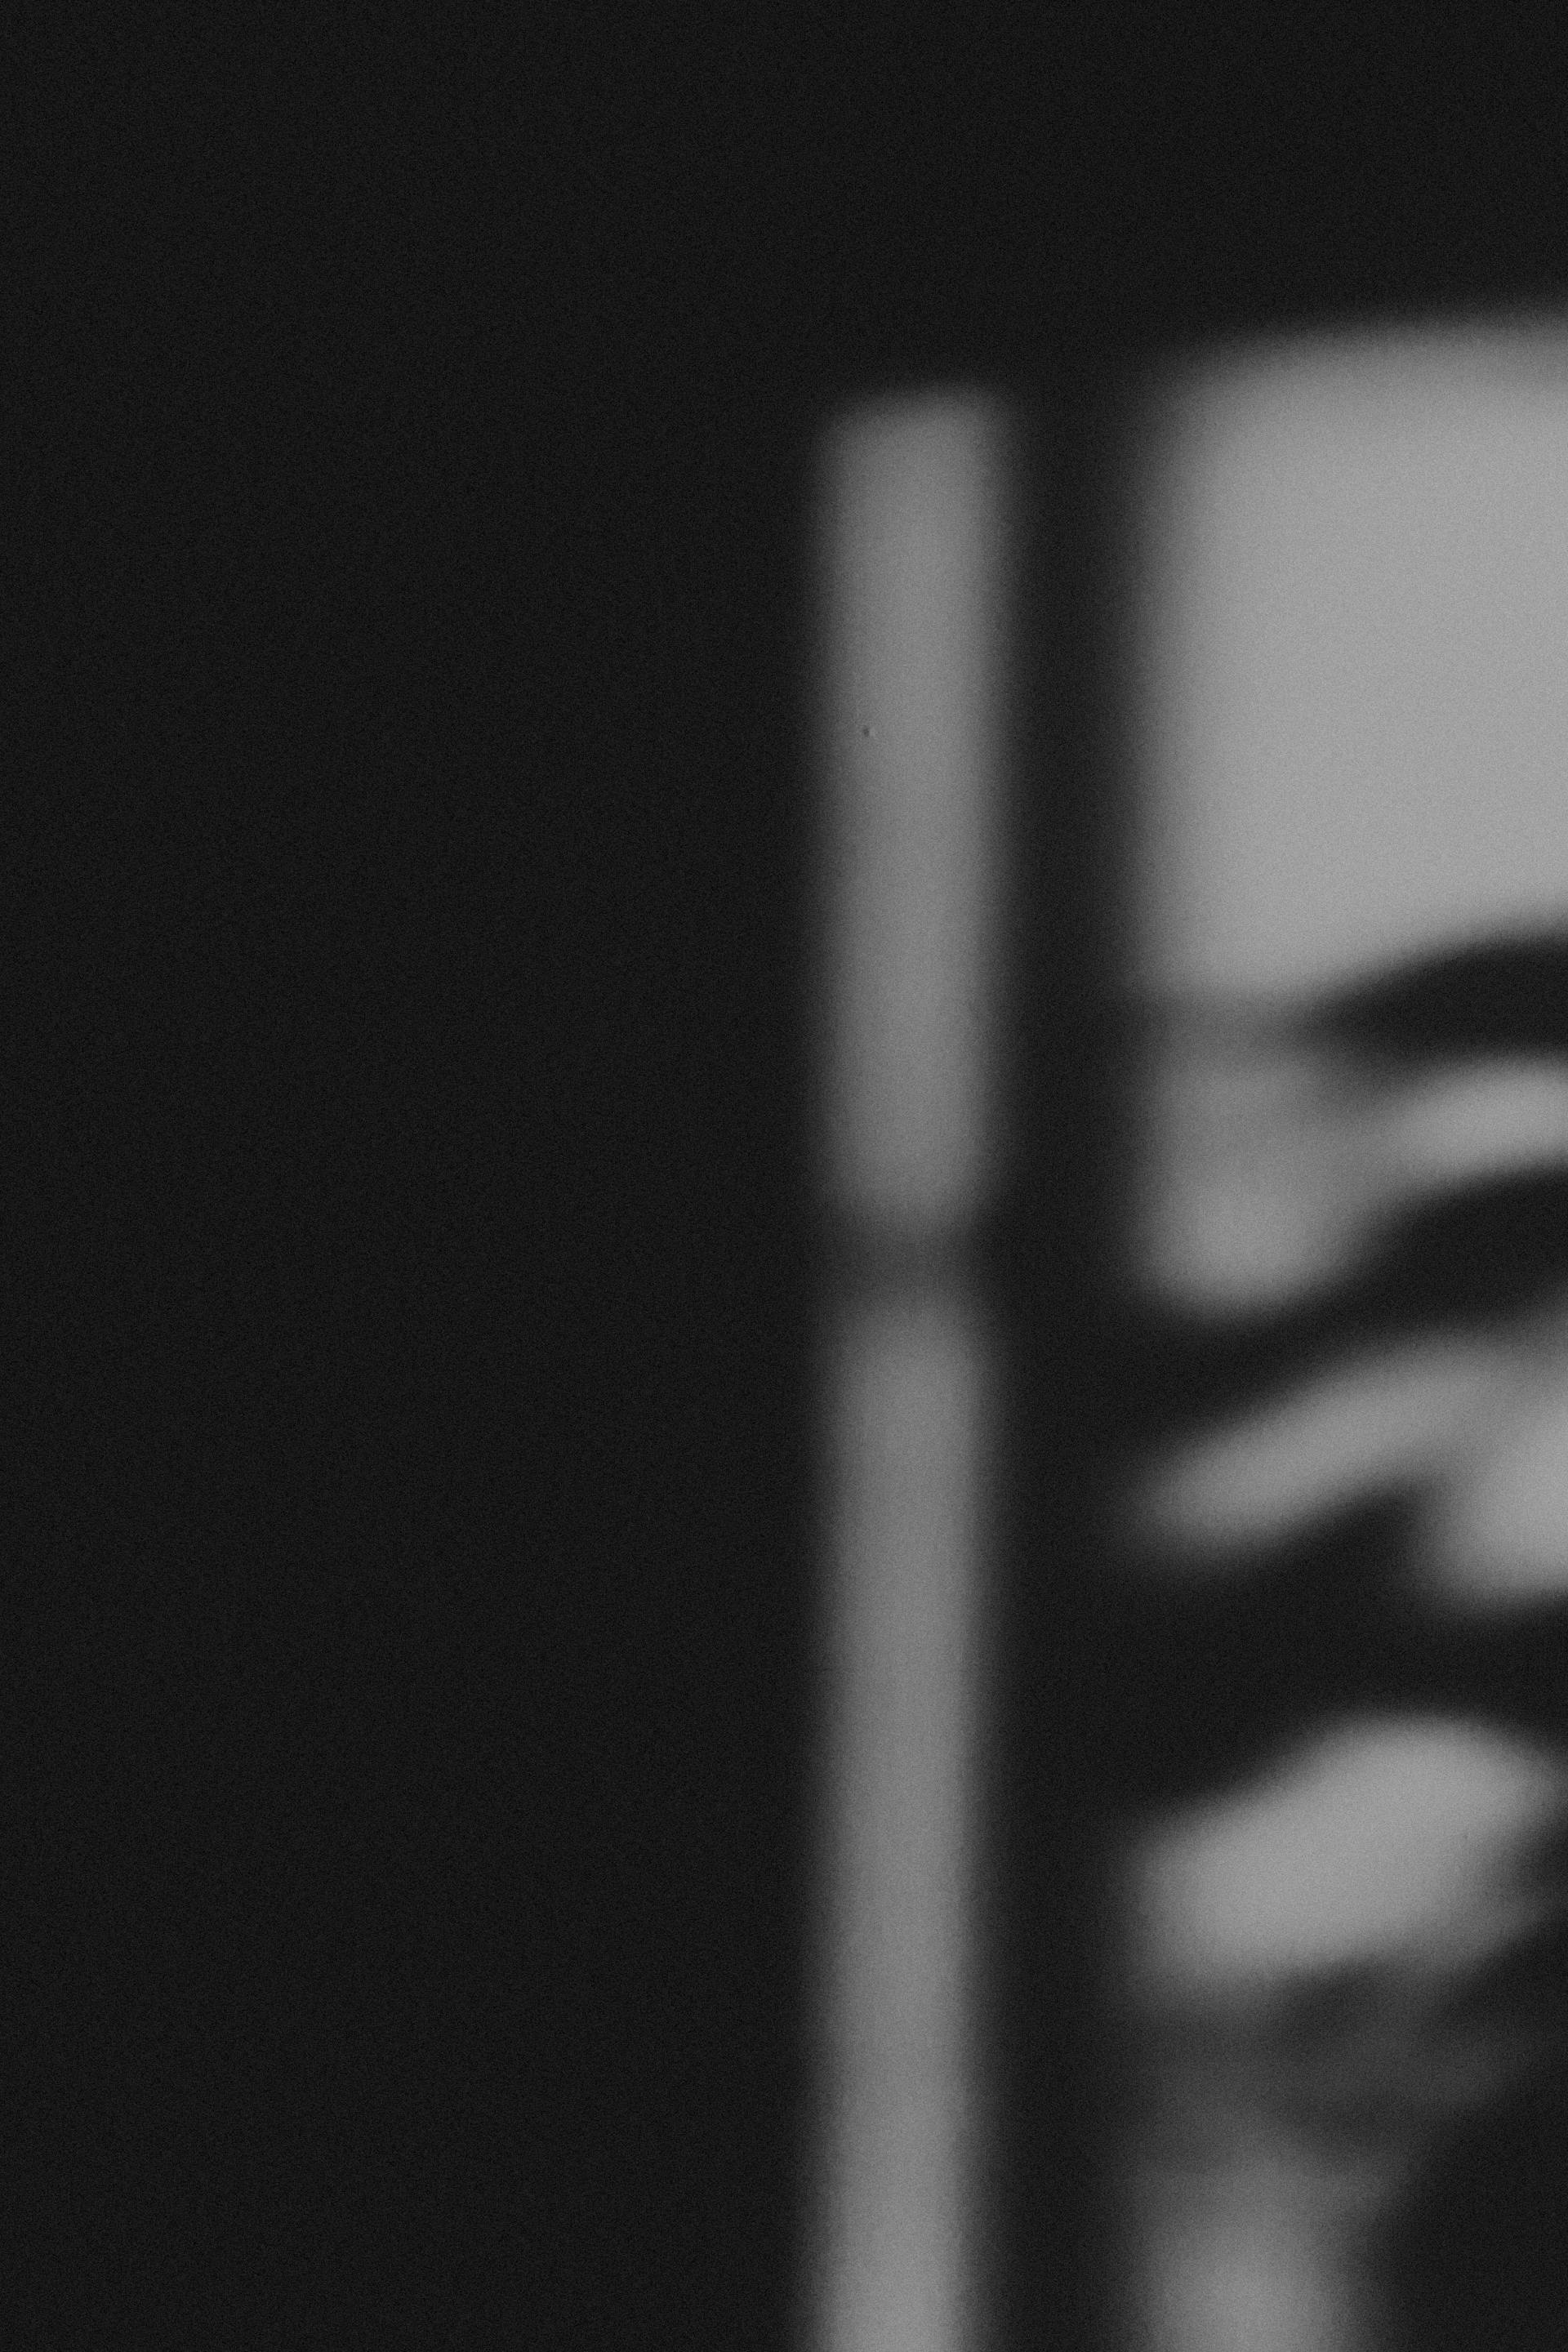 Shadows | Source: Pexels